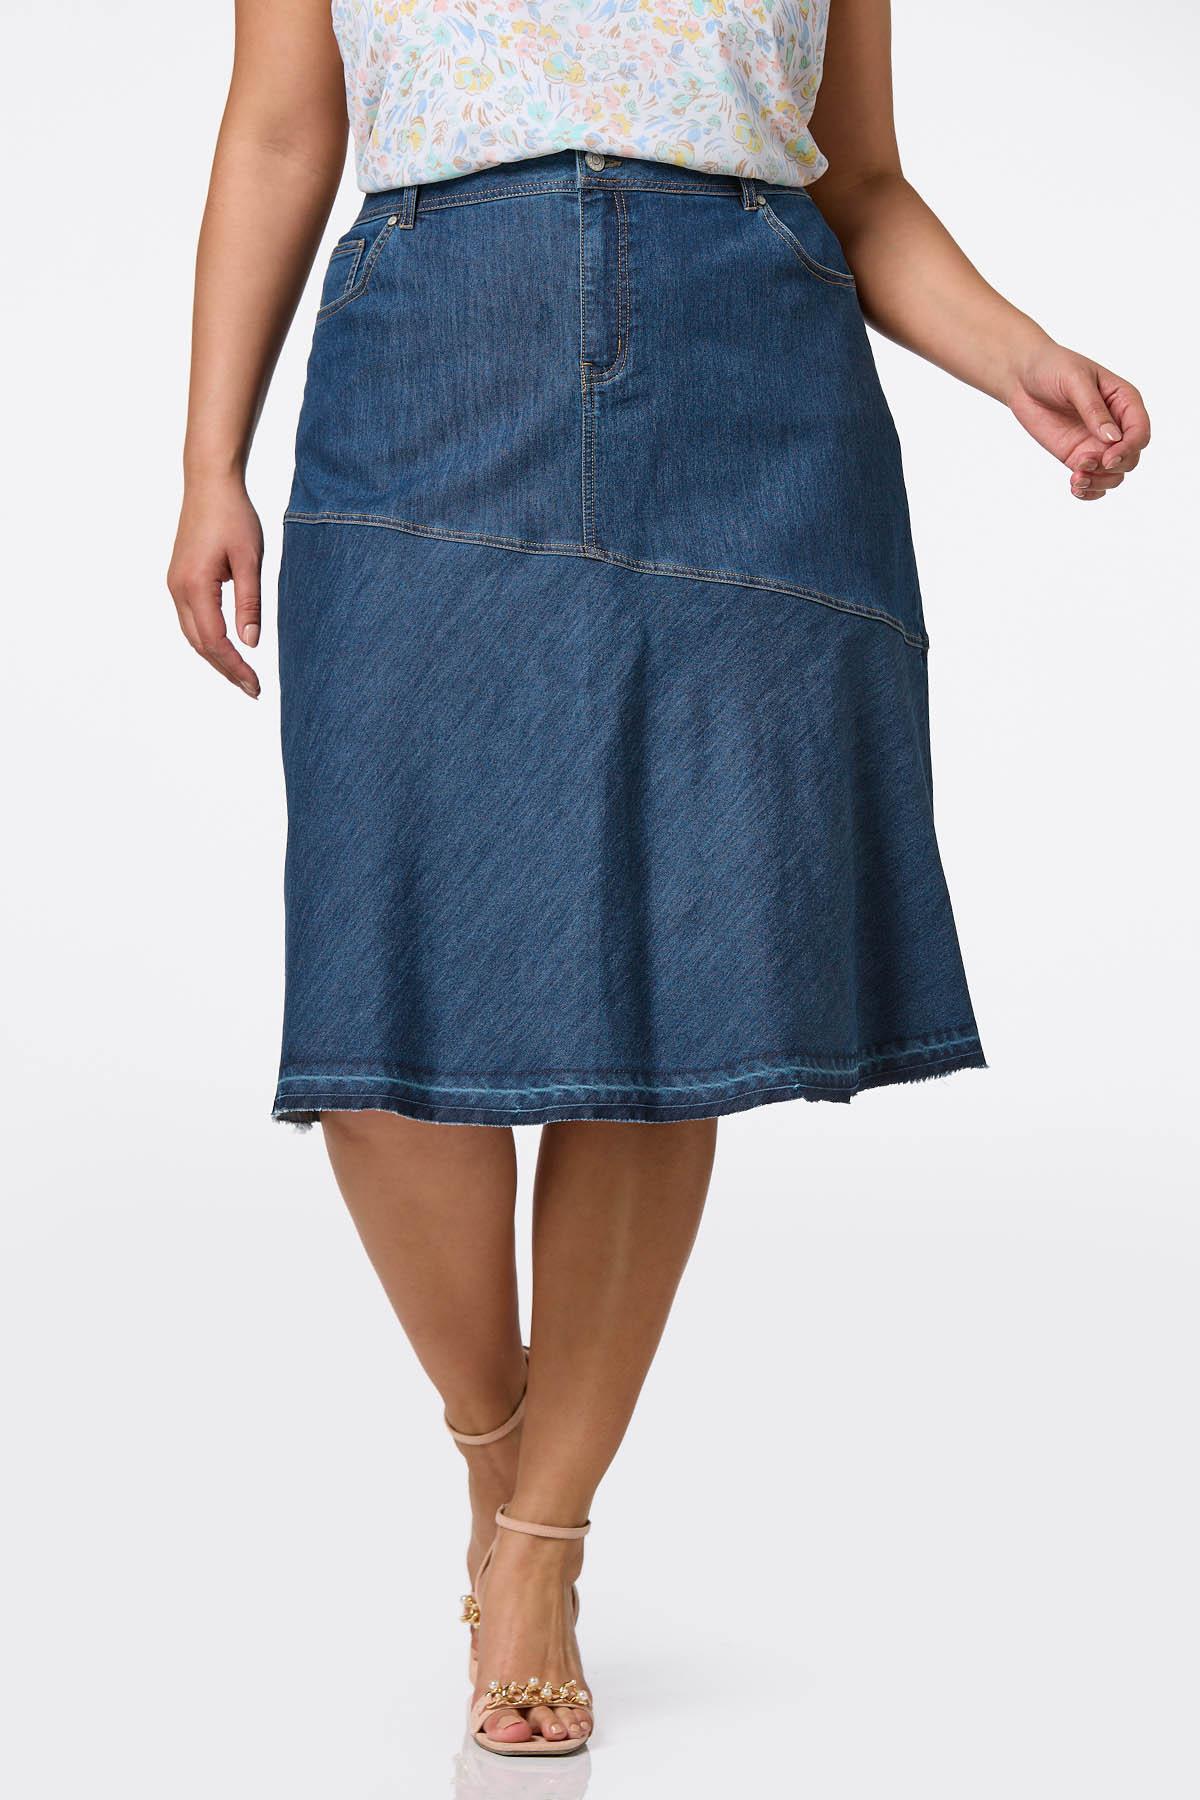 Cato Fashions  Cato Frayed Maxi Denim Skirt